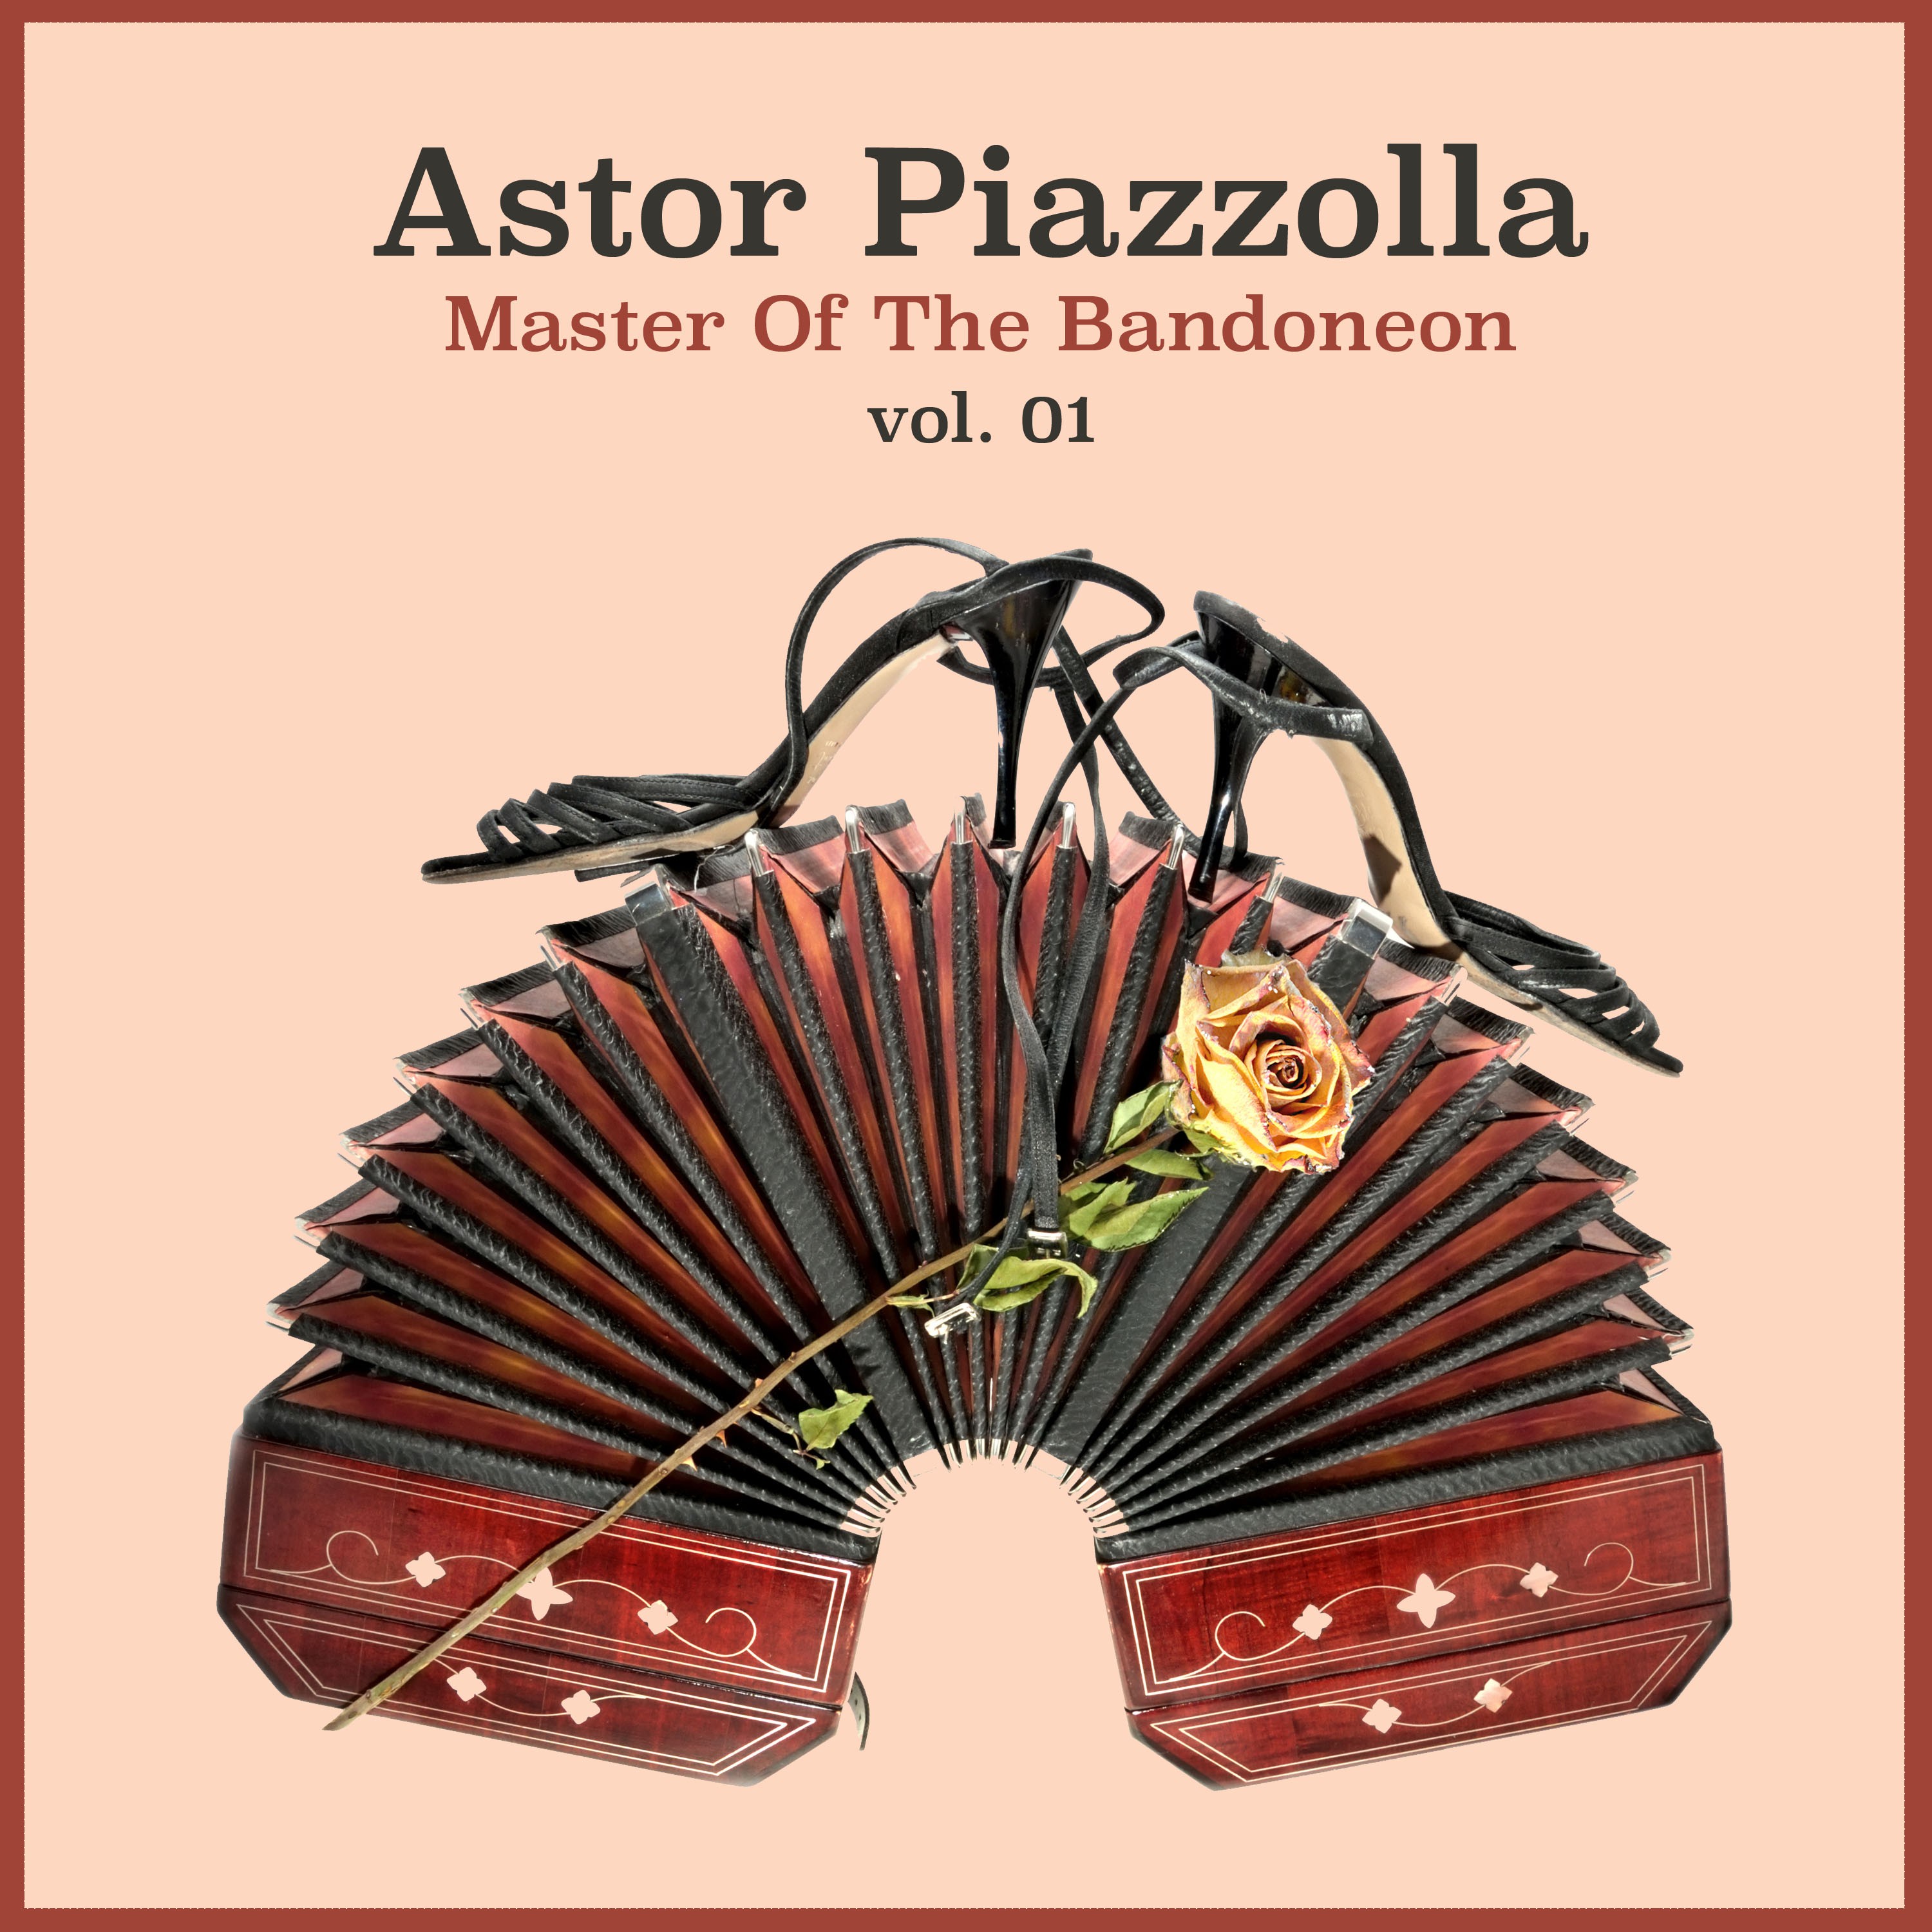 Master of the Bandoneon Vol. 01